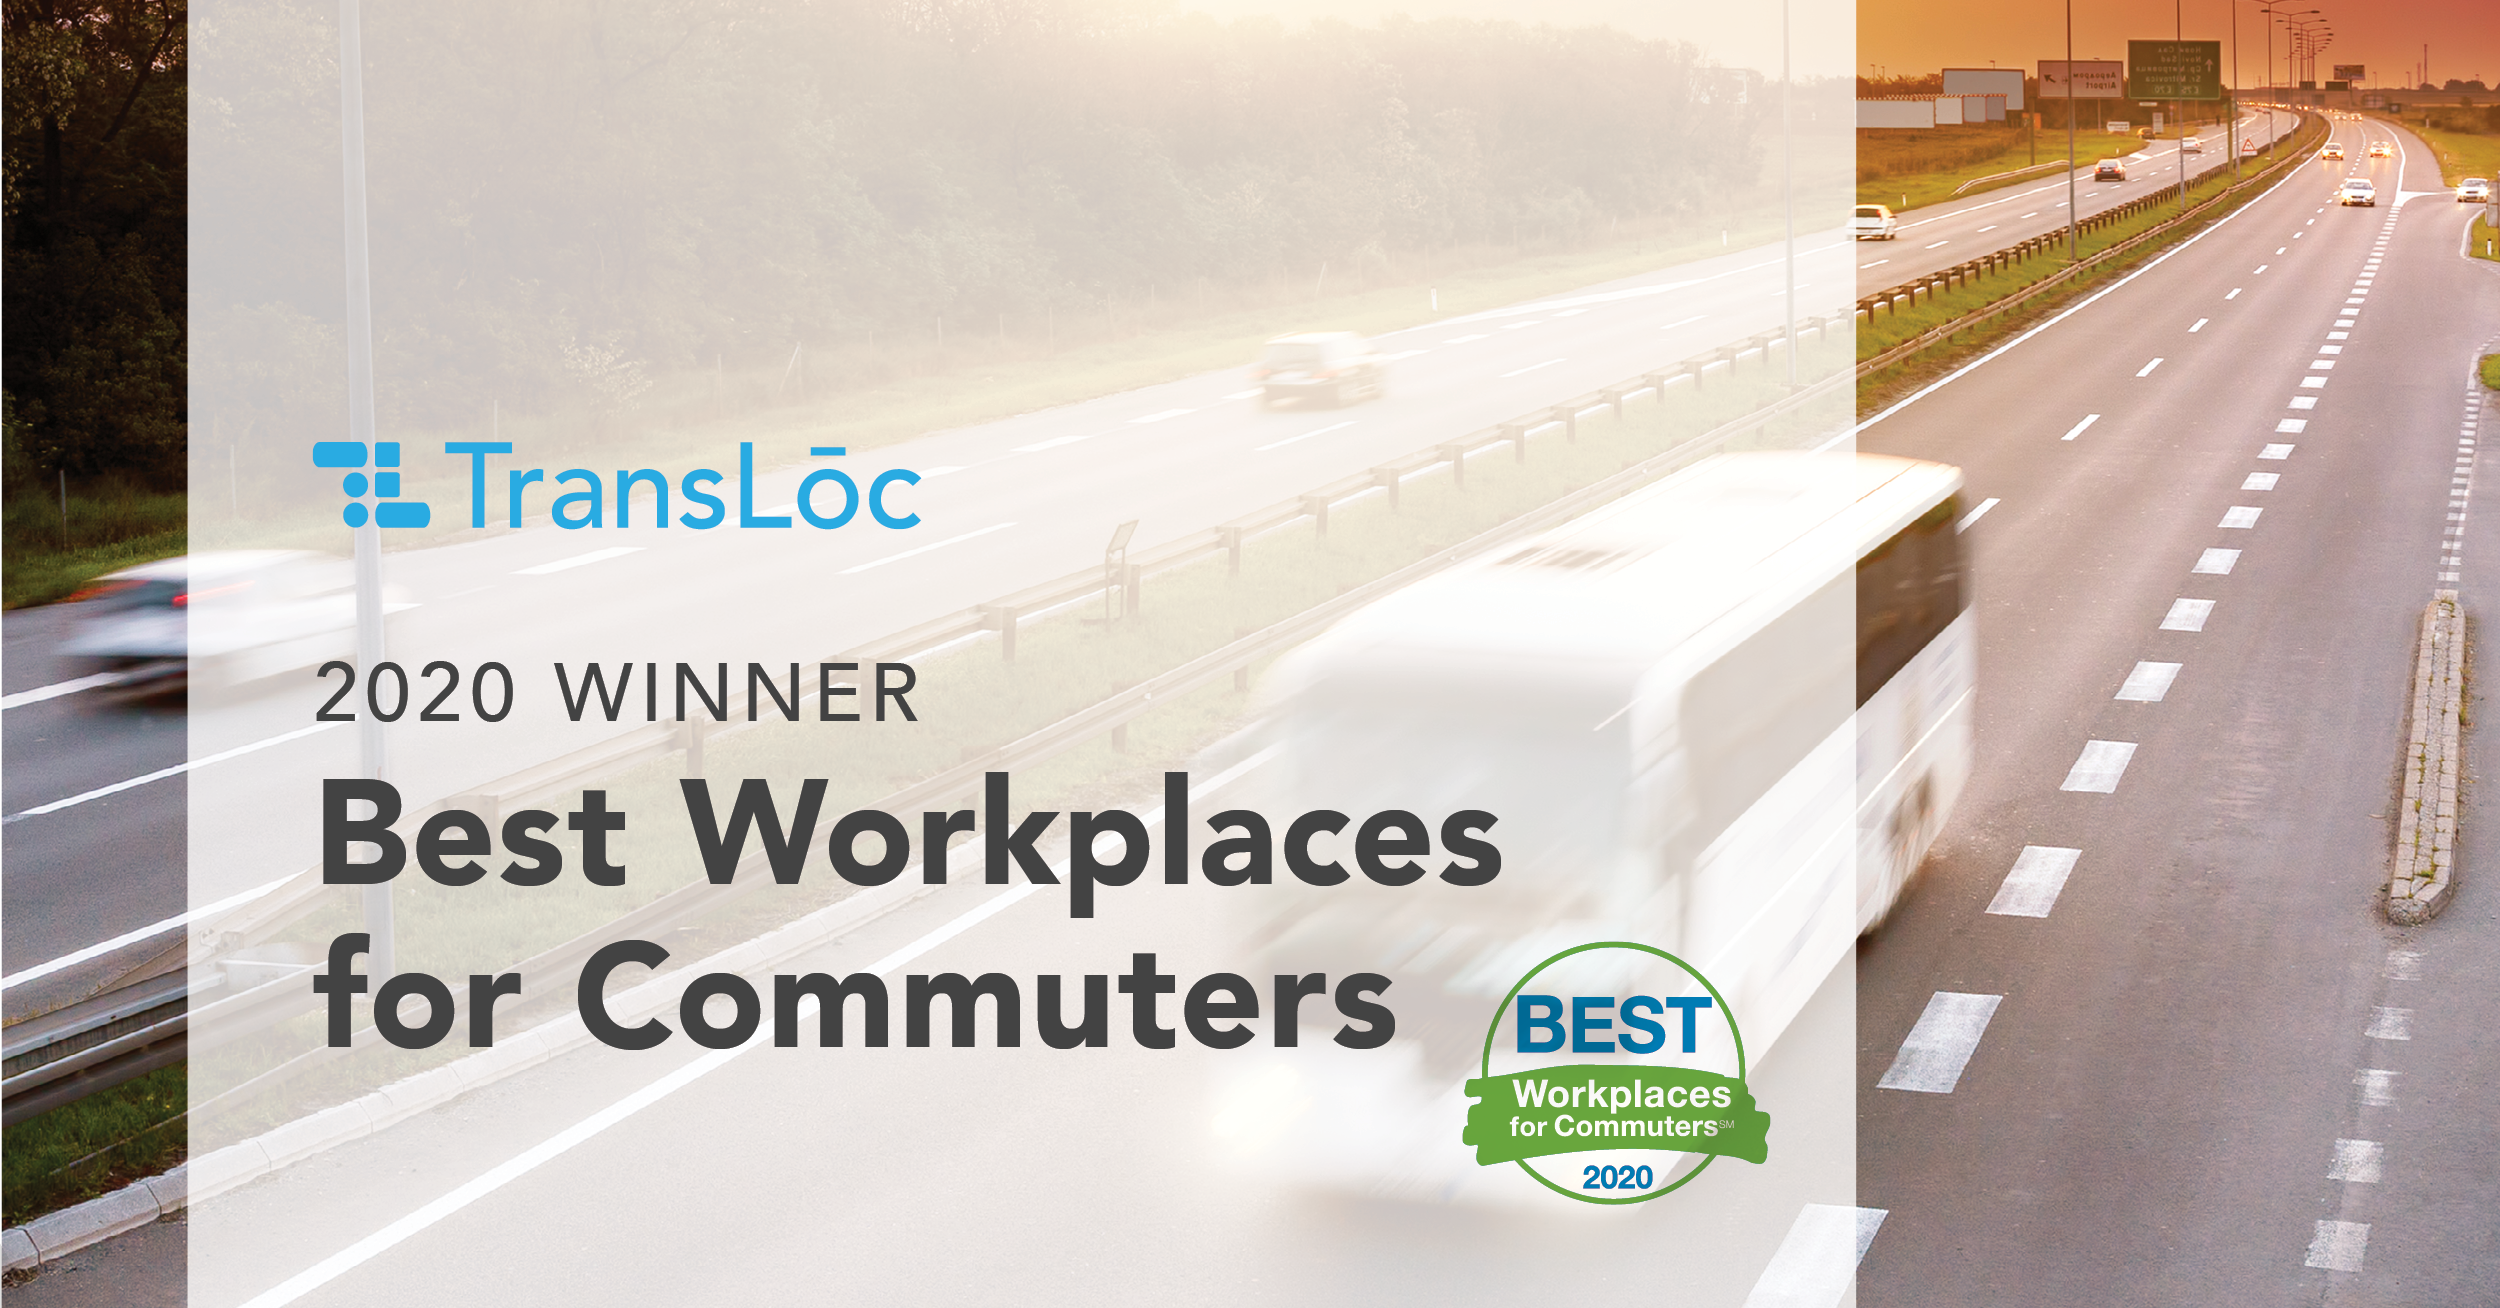 TransLoc 2020 Winner Best Workplaces for Commuters